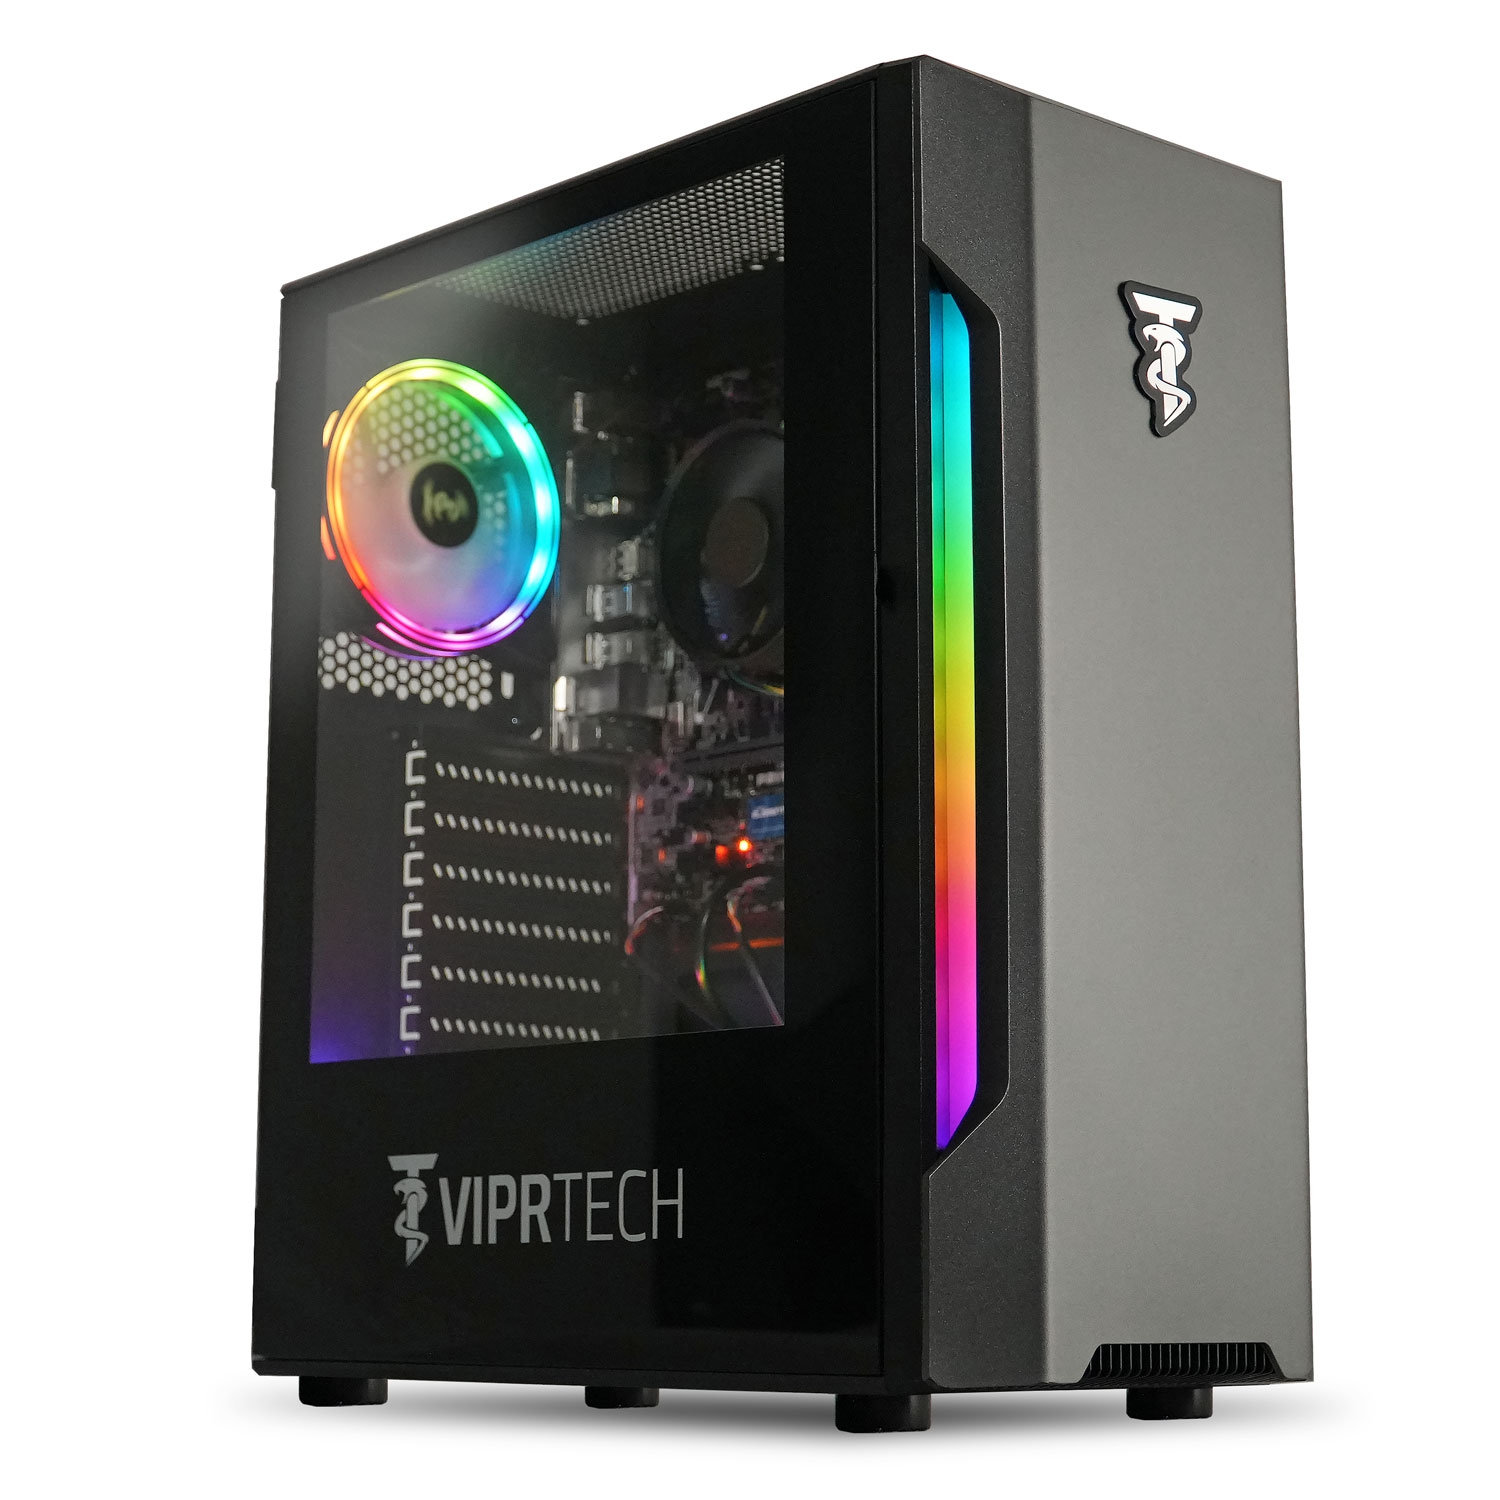 ViprTech Whiteout Gaming PC Desktop Computer - AMD Ryzen 5 5600G (12-LCore 4.4Ghz), AMD RX Vega 7 Graphics, 16GB DDR4, 128GB NVMe SSD, 1TB HDD, WiFi, RGB, Win 11, Warranty, Black